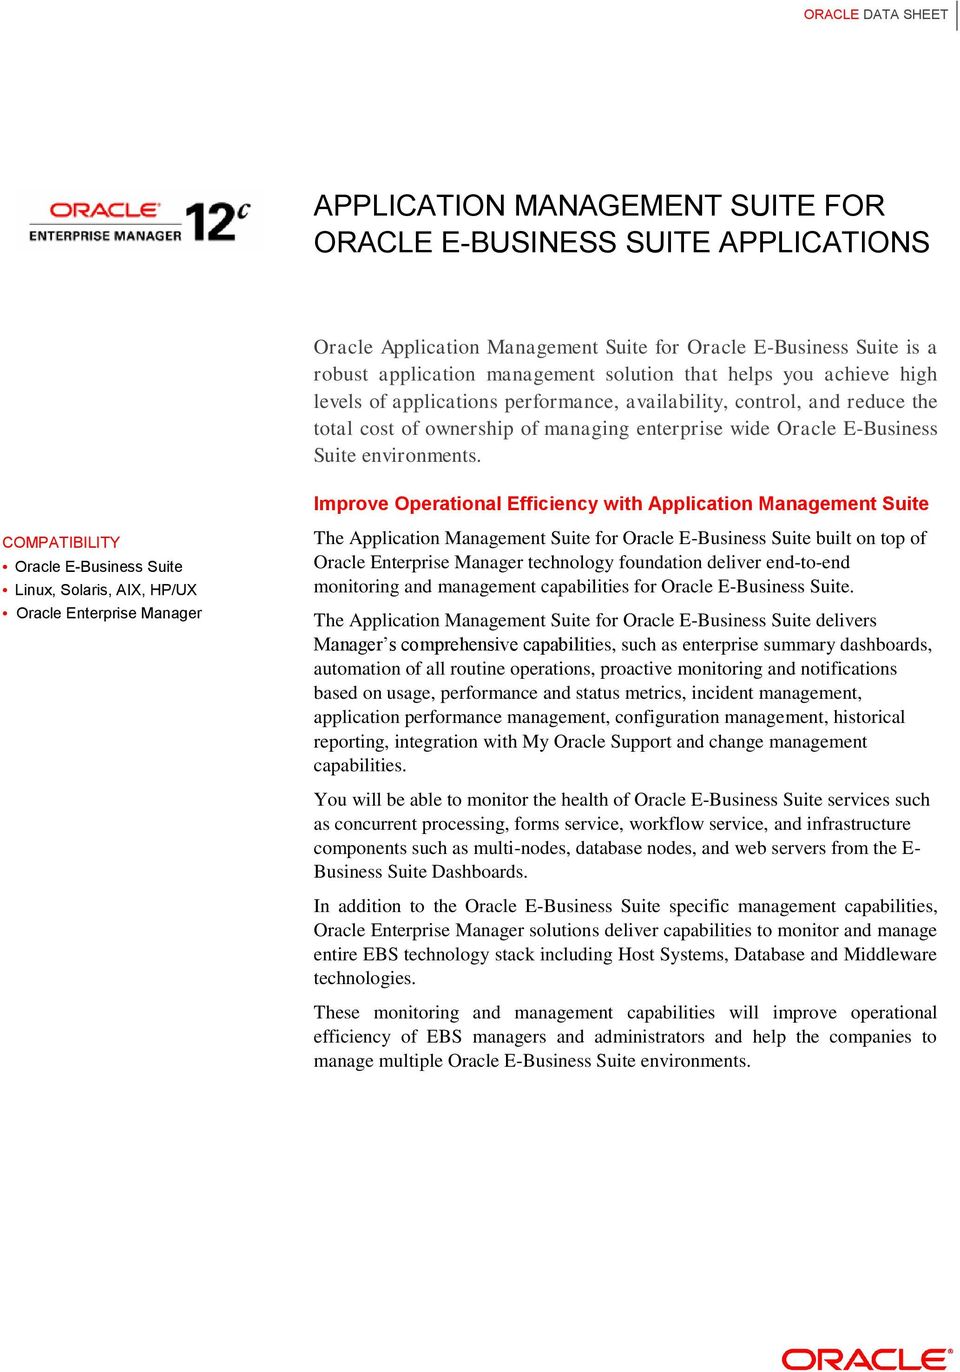 Improve Operational Efficiency with Application Management Suite COMPATIBILITY Oracle E-Business Suite Linux, Solaris, AIX, HP/UX Oracle Enterprise Manager The Application Management Suite for Oracle